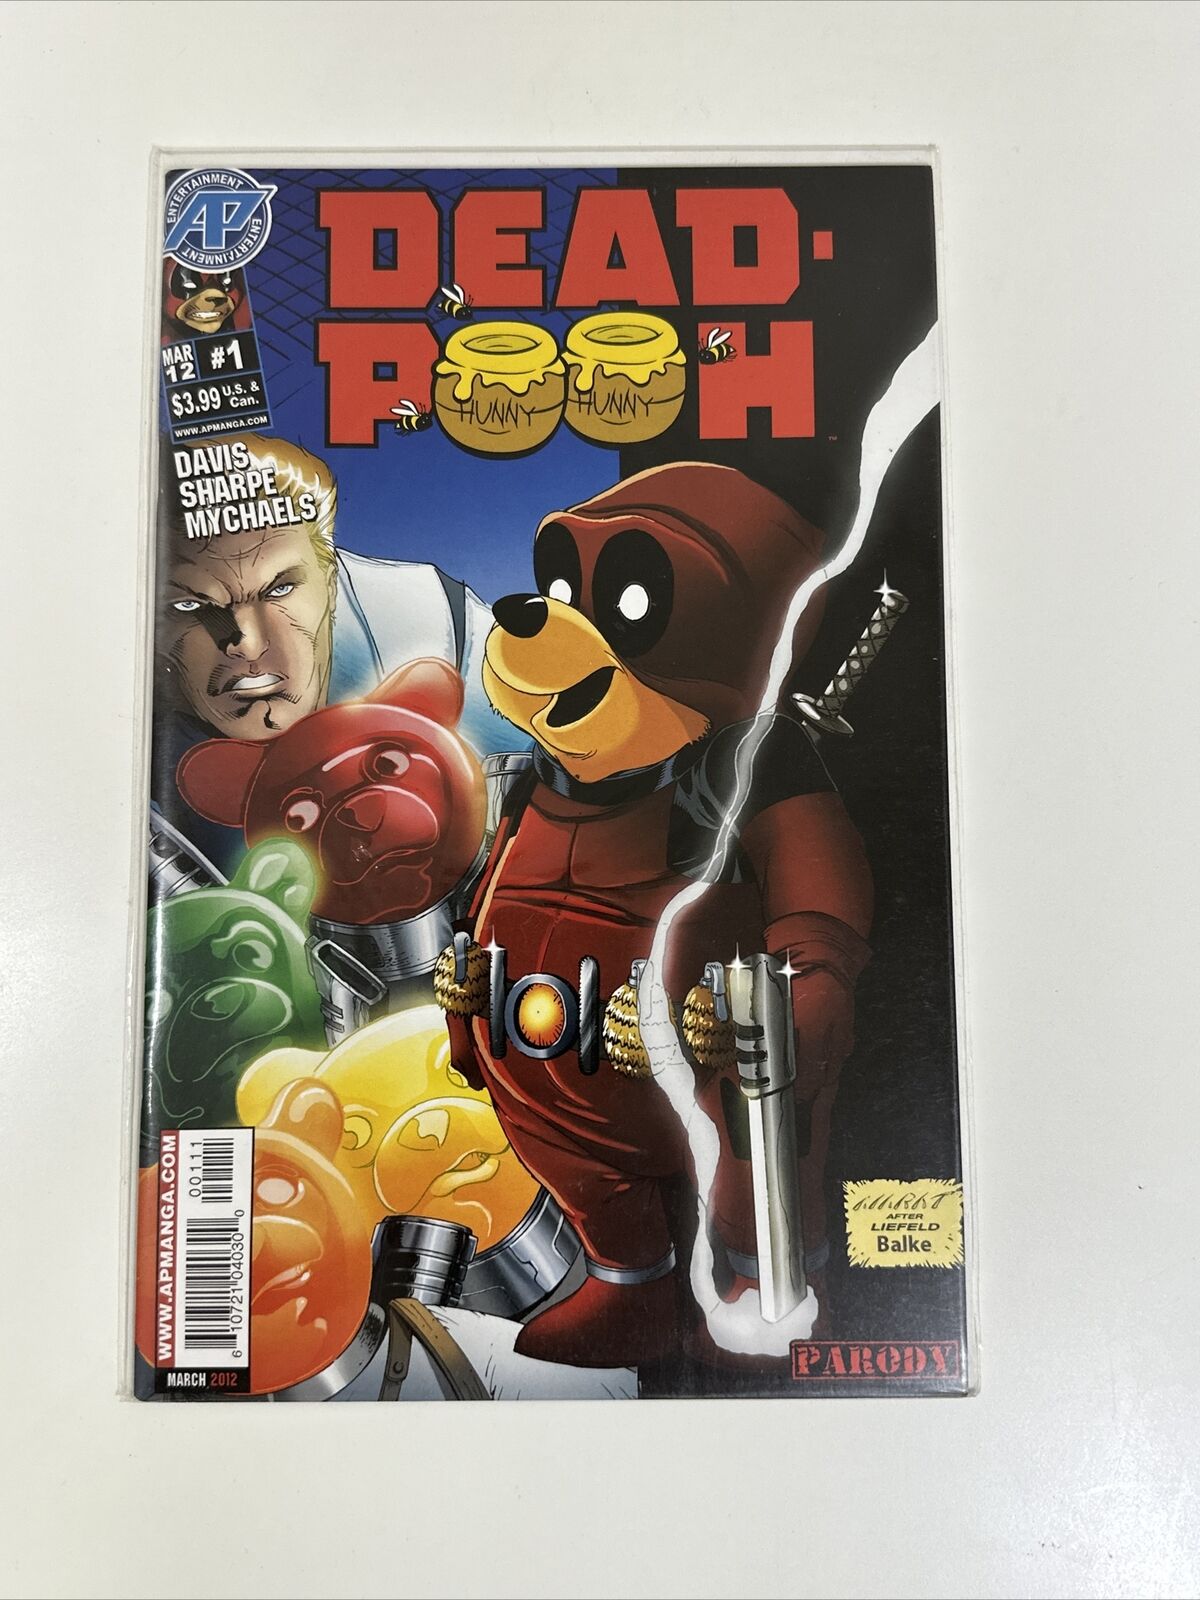 Dead-Pooh #1 (2012) | Antartic Press | Deadpool parody A.P. Deadpooh